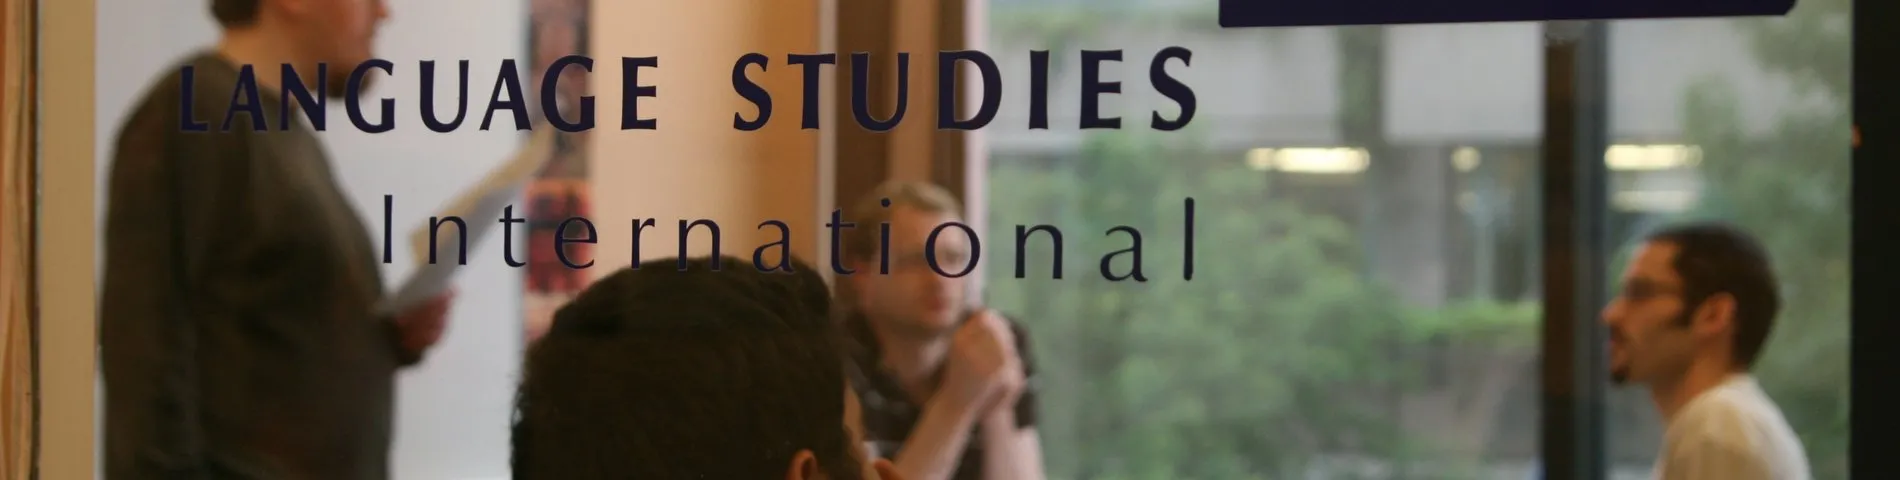 LSI - Language Studies International bilde 1